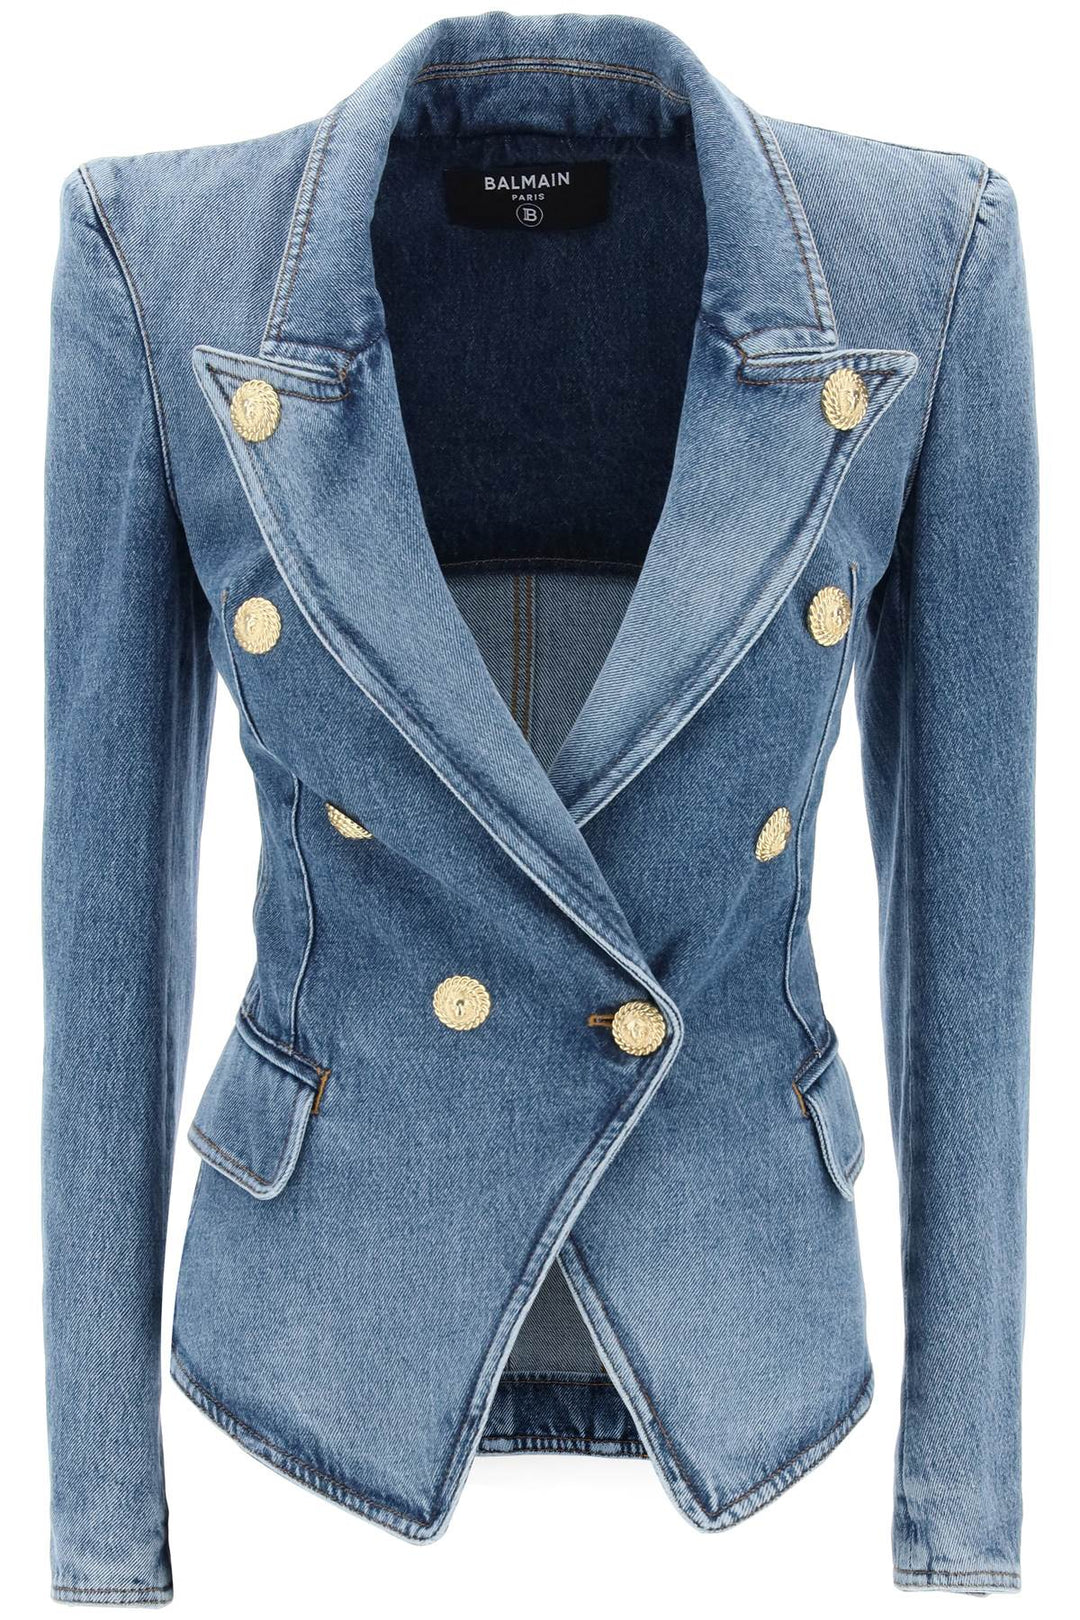 Balmain Denim Jacket With Eight Buttons   Blu